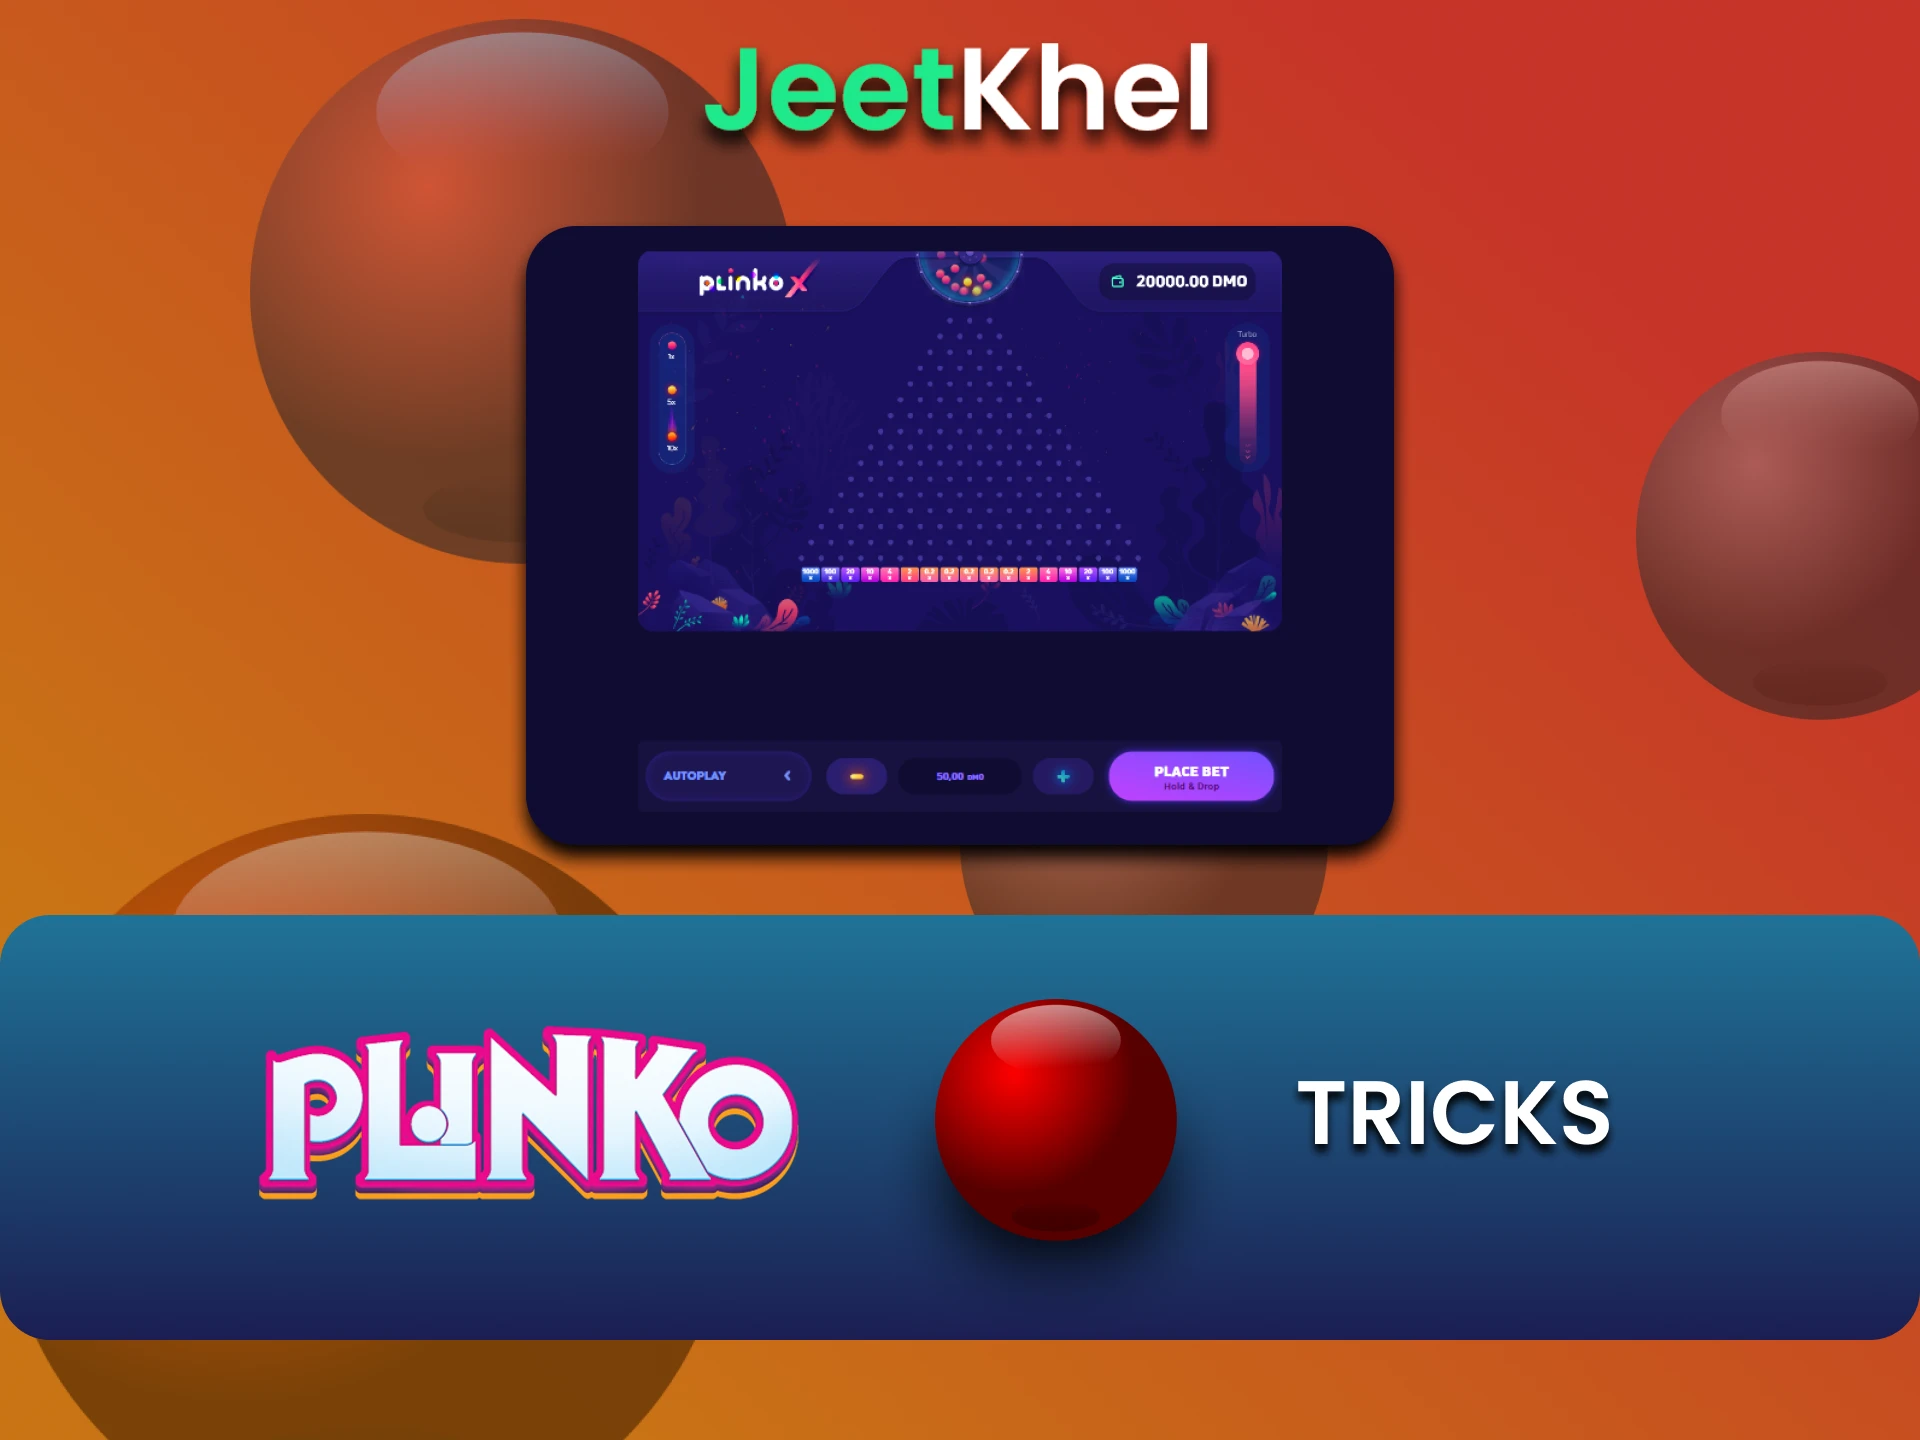 There are many tricks for winning Plinko on JeetKhel.